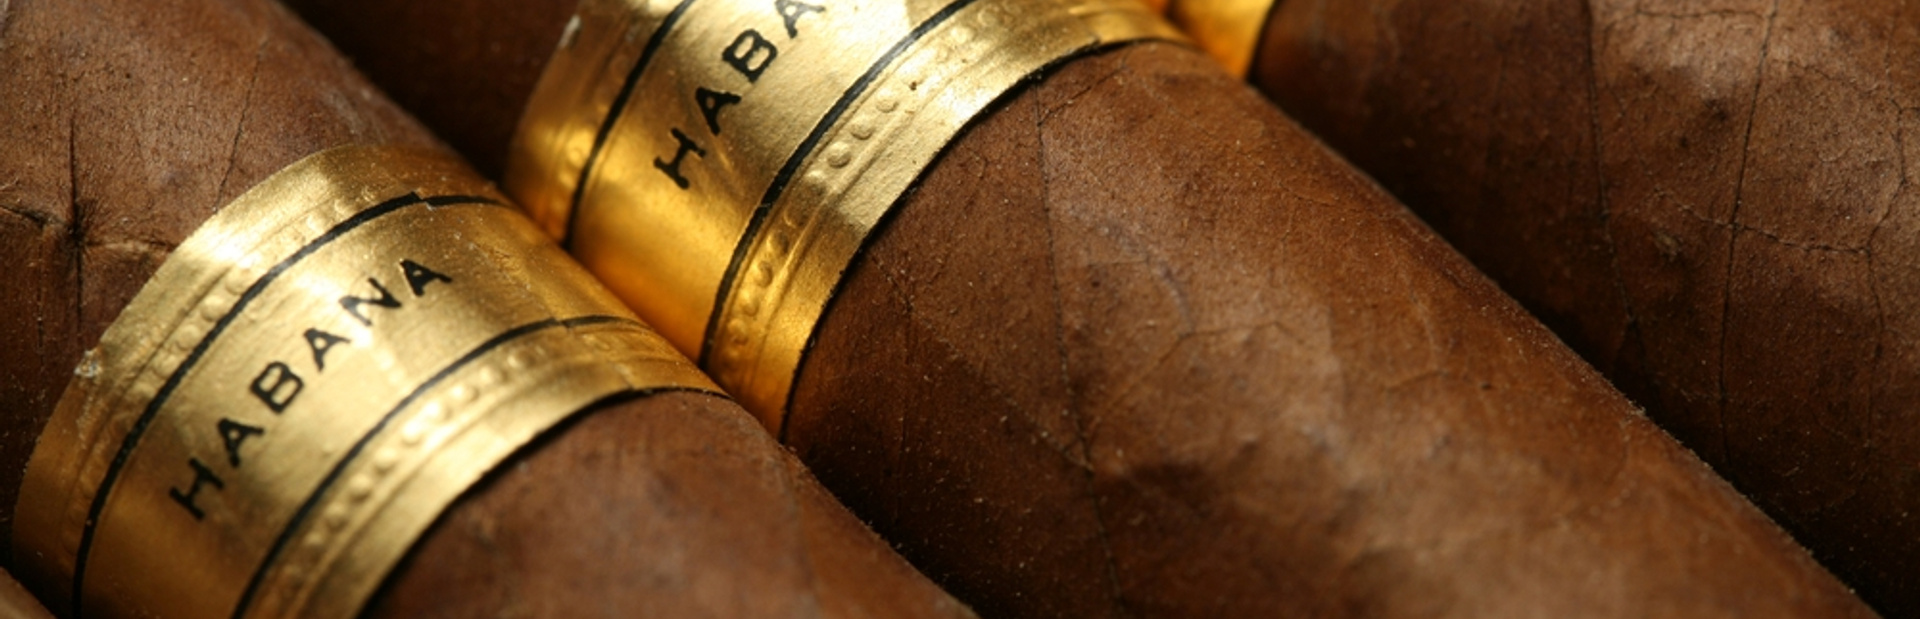 A selection of Cuban cigars